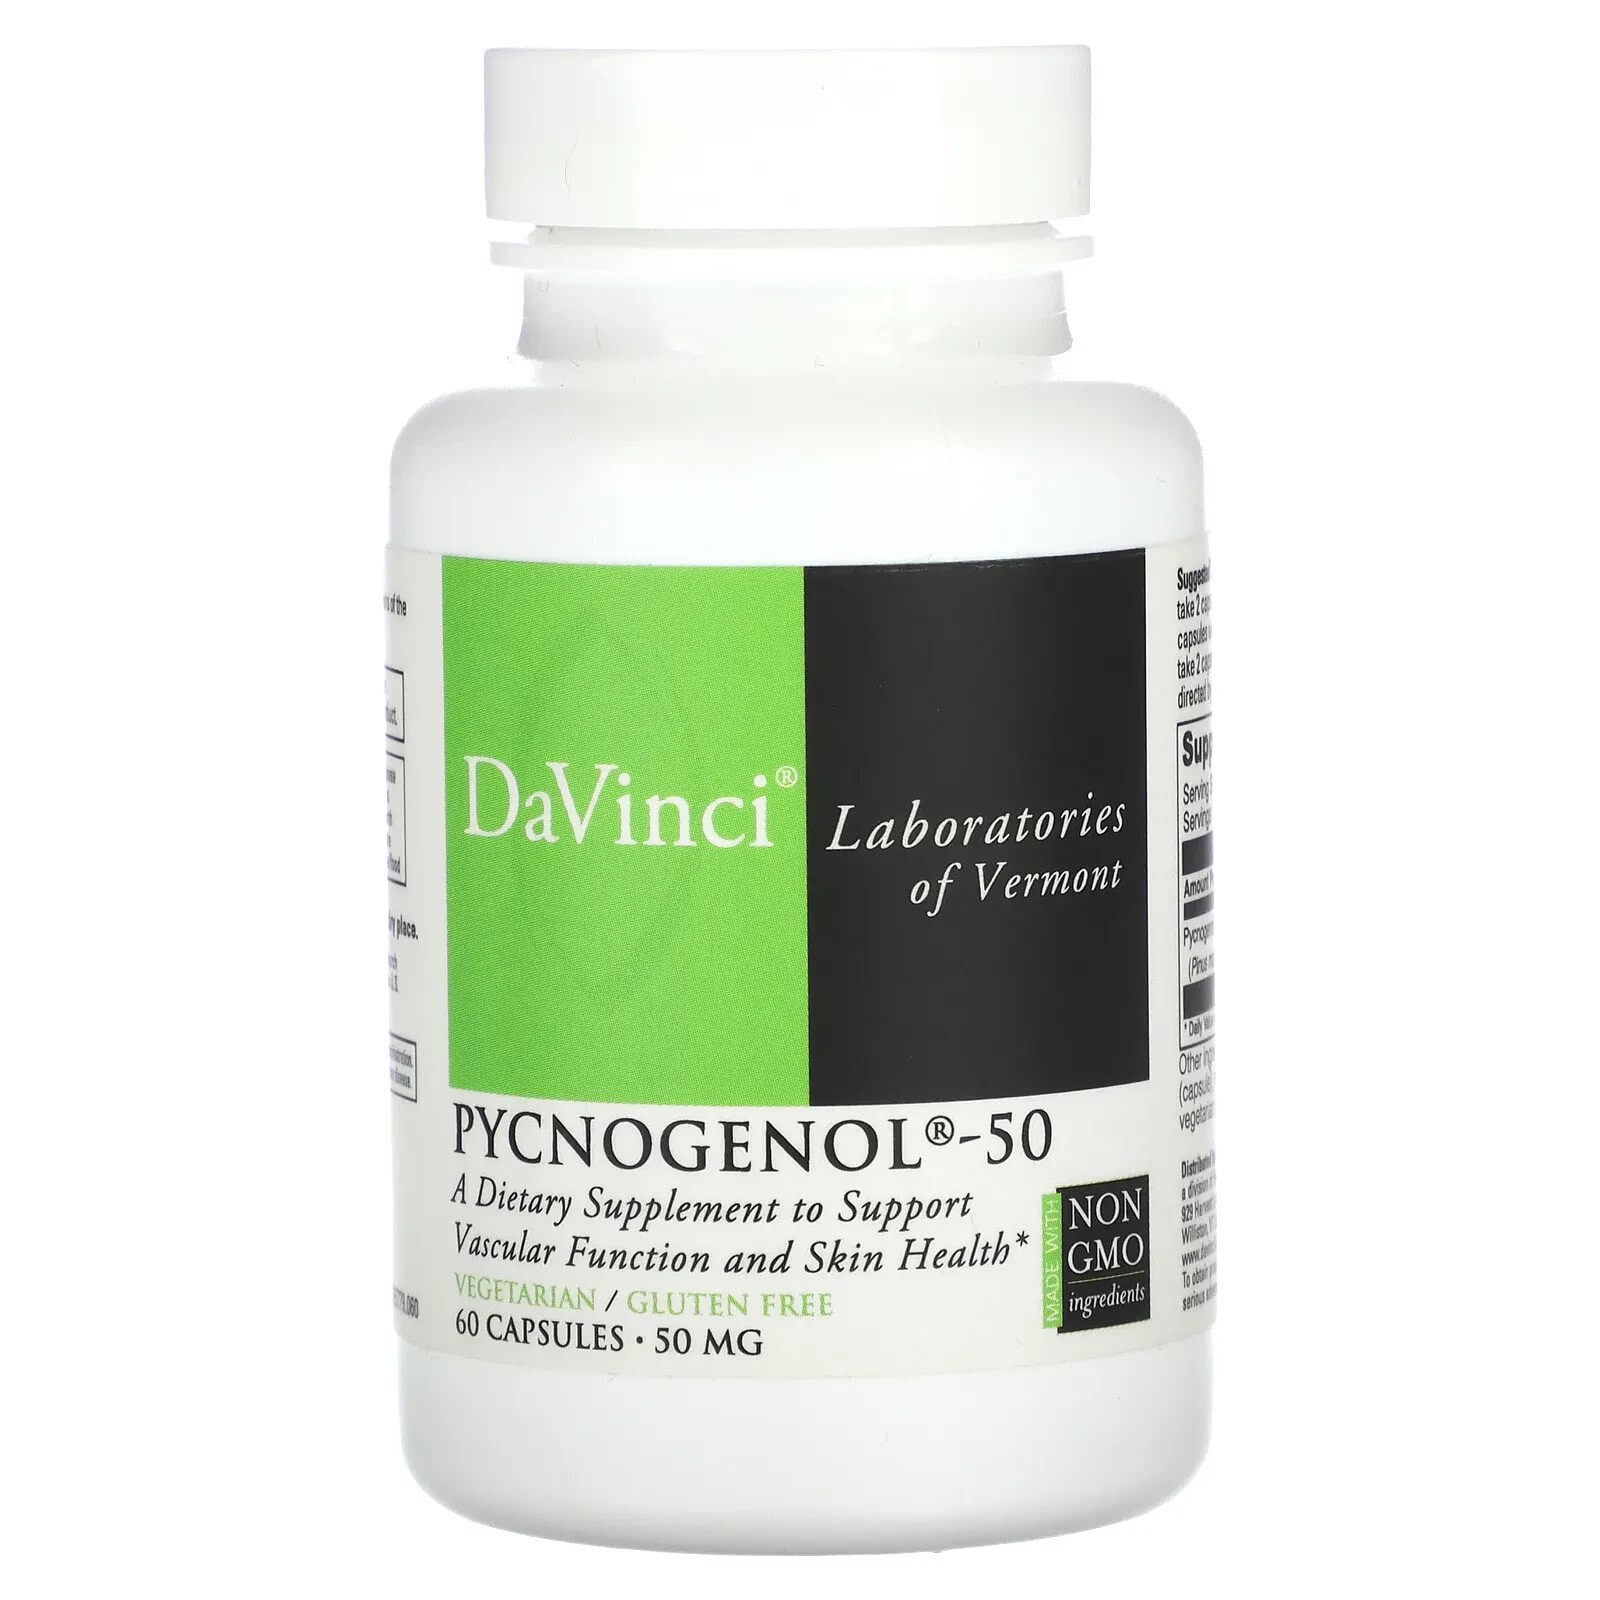 DaVinci Laboratories of Vermont, Пикногенол-50, 50 мг, 30 капсул